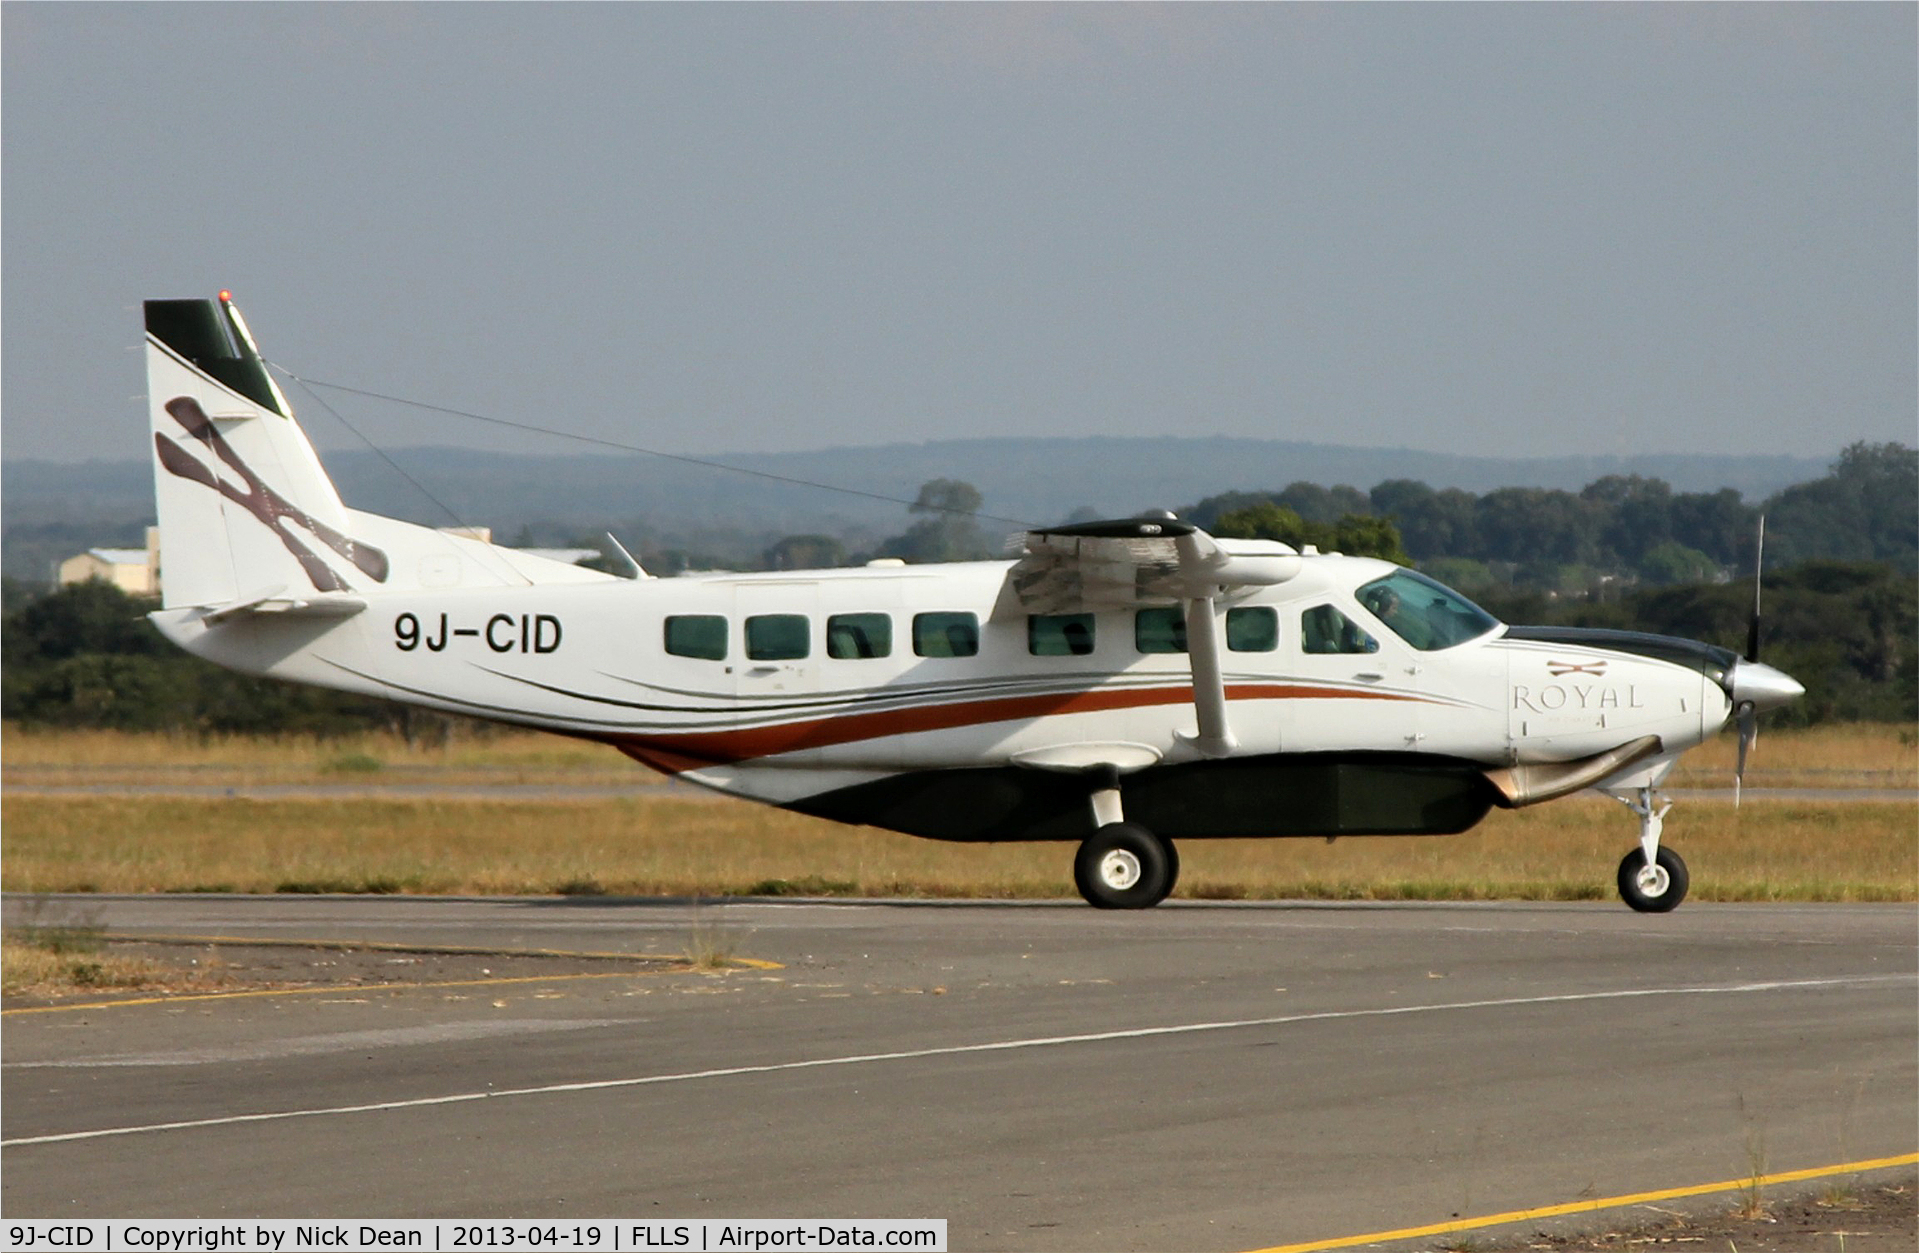 9J-CID, 2008 Cessna 208B Grand Caravan C/N 208B1307, FLLS/LUN